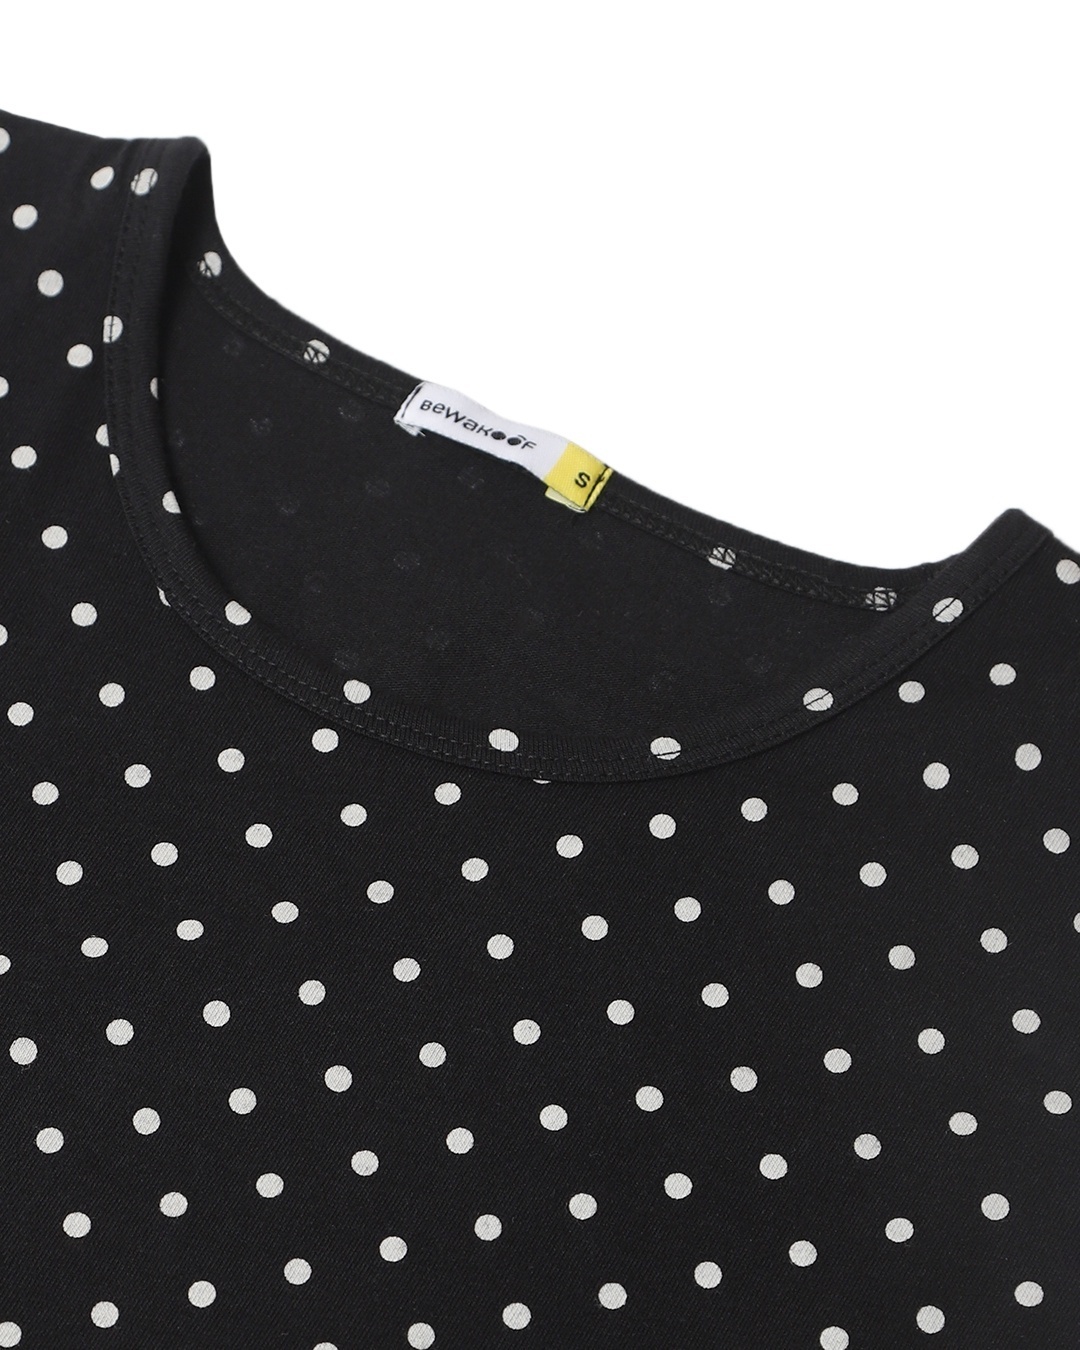 Shop Women's Black All Over Polka Dot Printed Tank Top